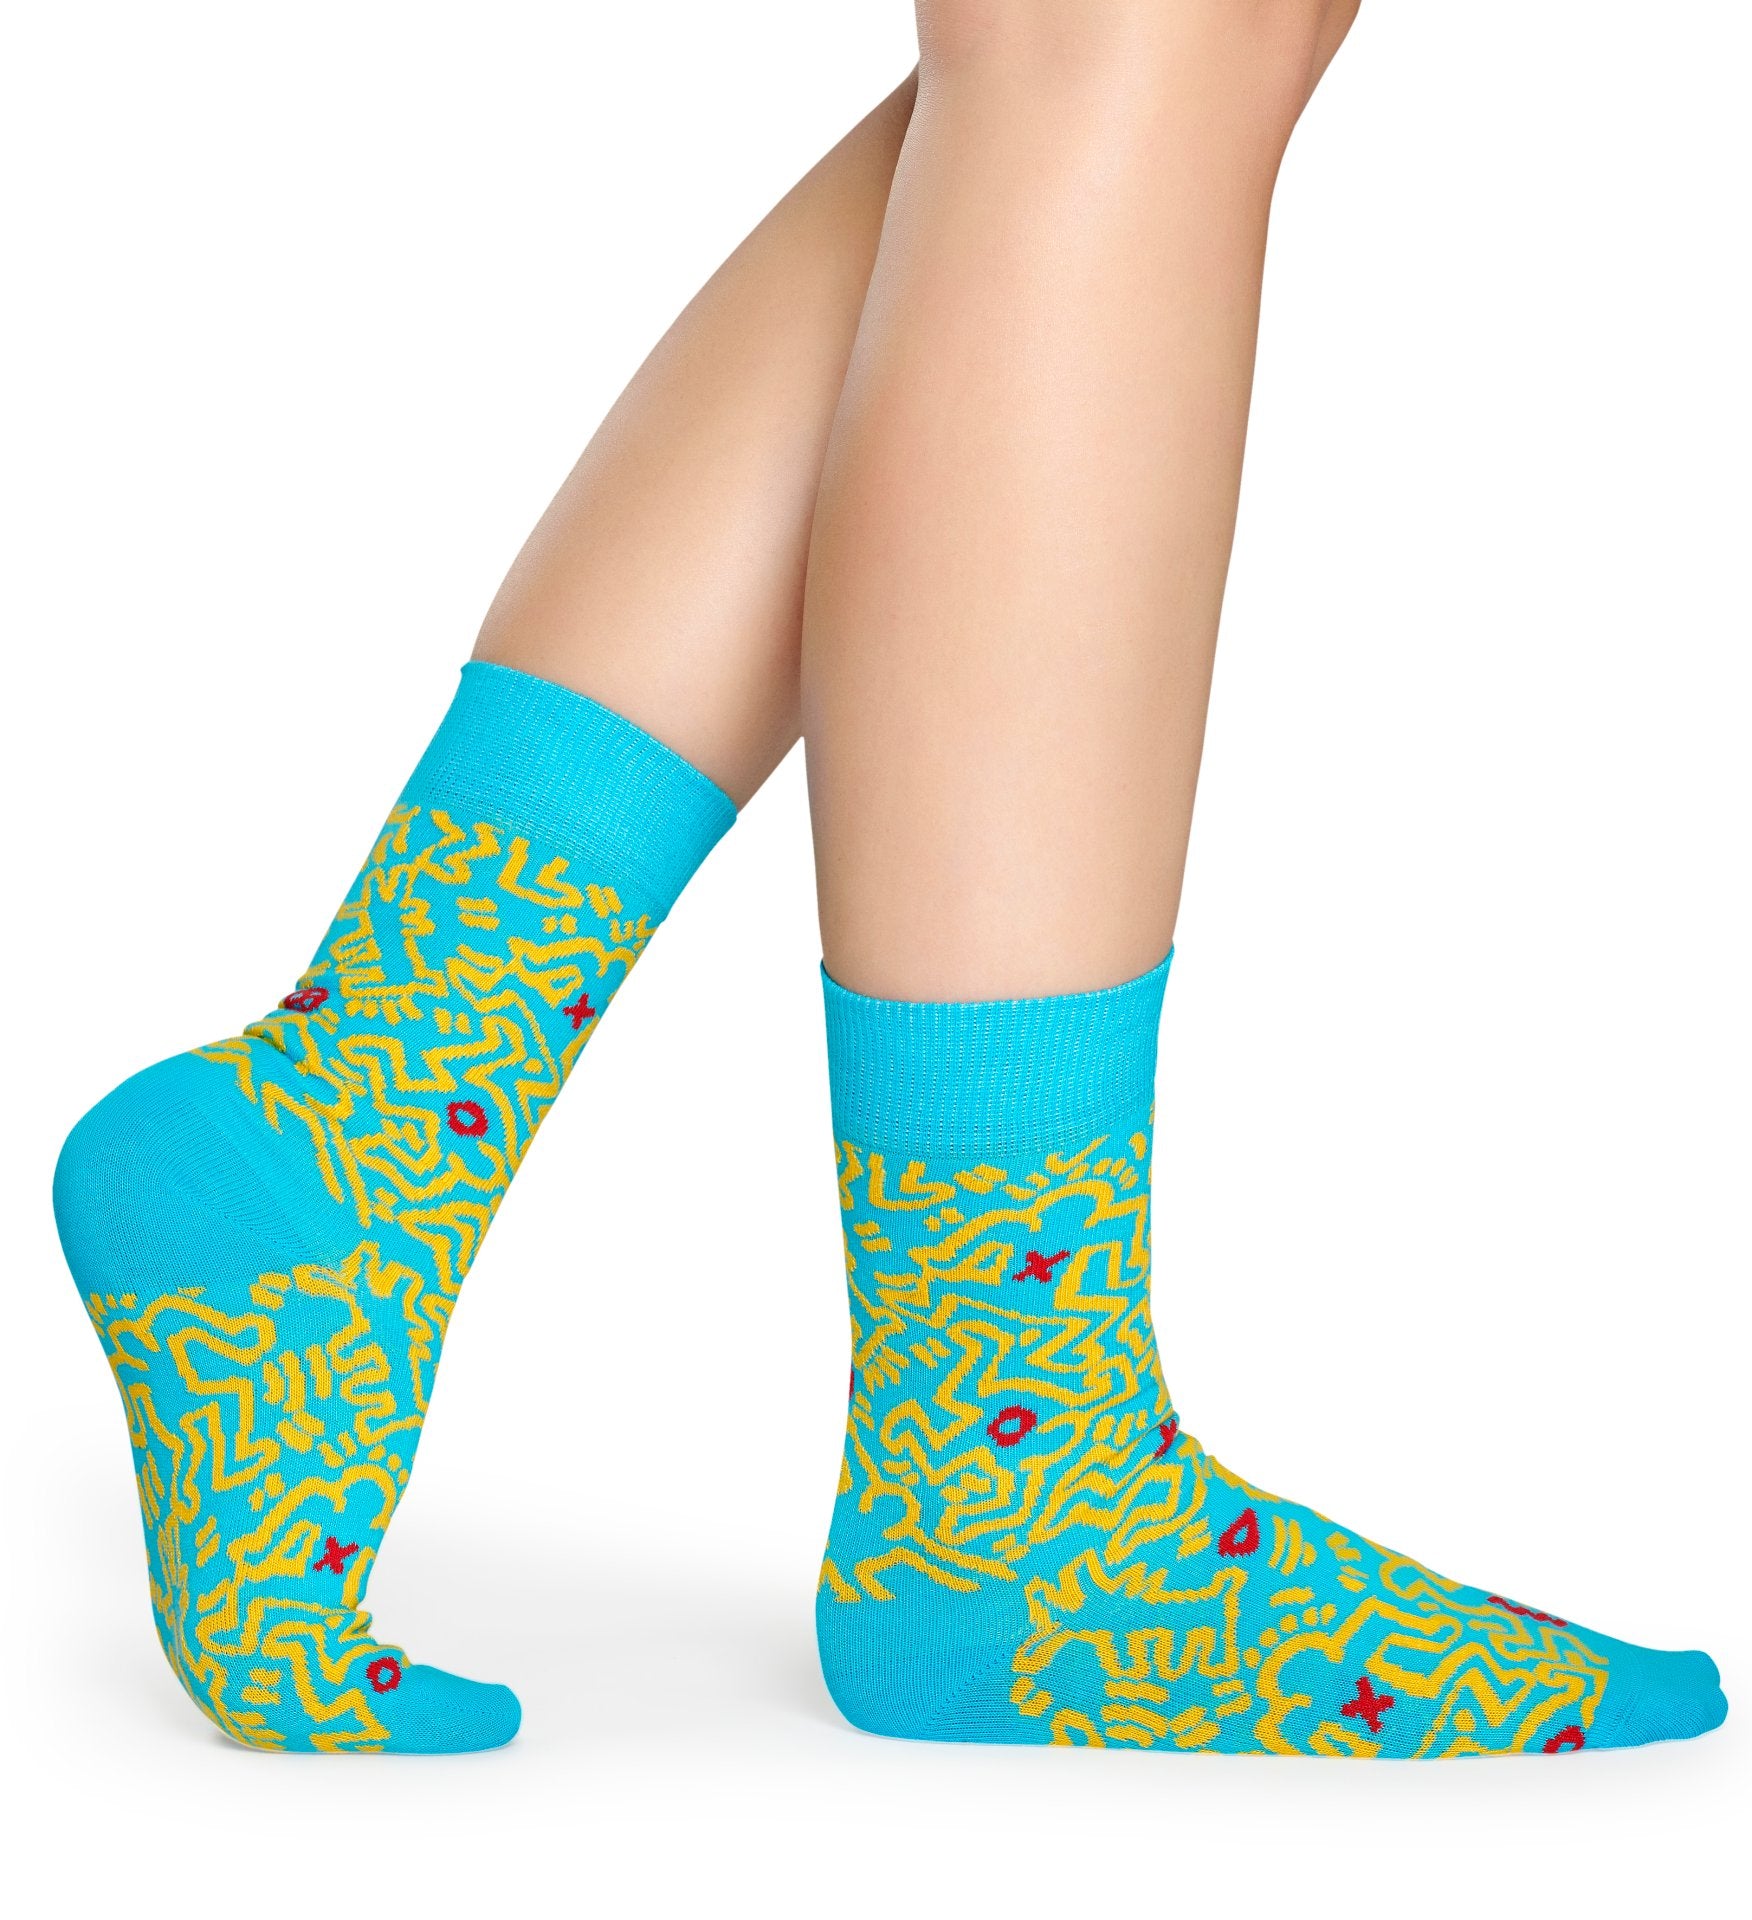 Modré ponožky z kolekce Happy Socks x Keith Haring, vzor All Over